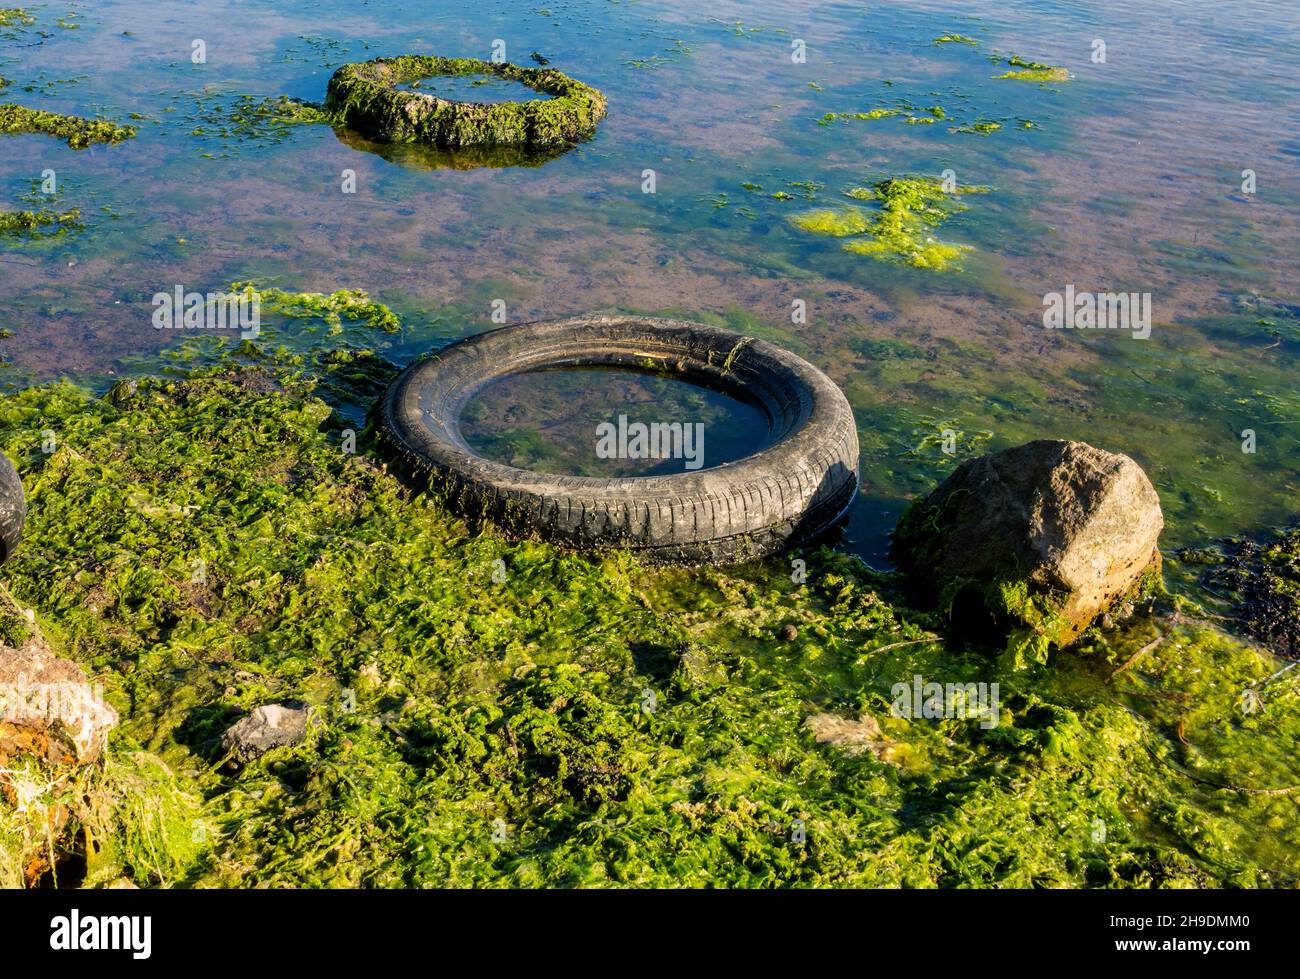 Müll und Abfälle auf dem Meer, Polution Stockfoto